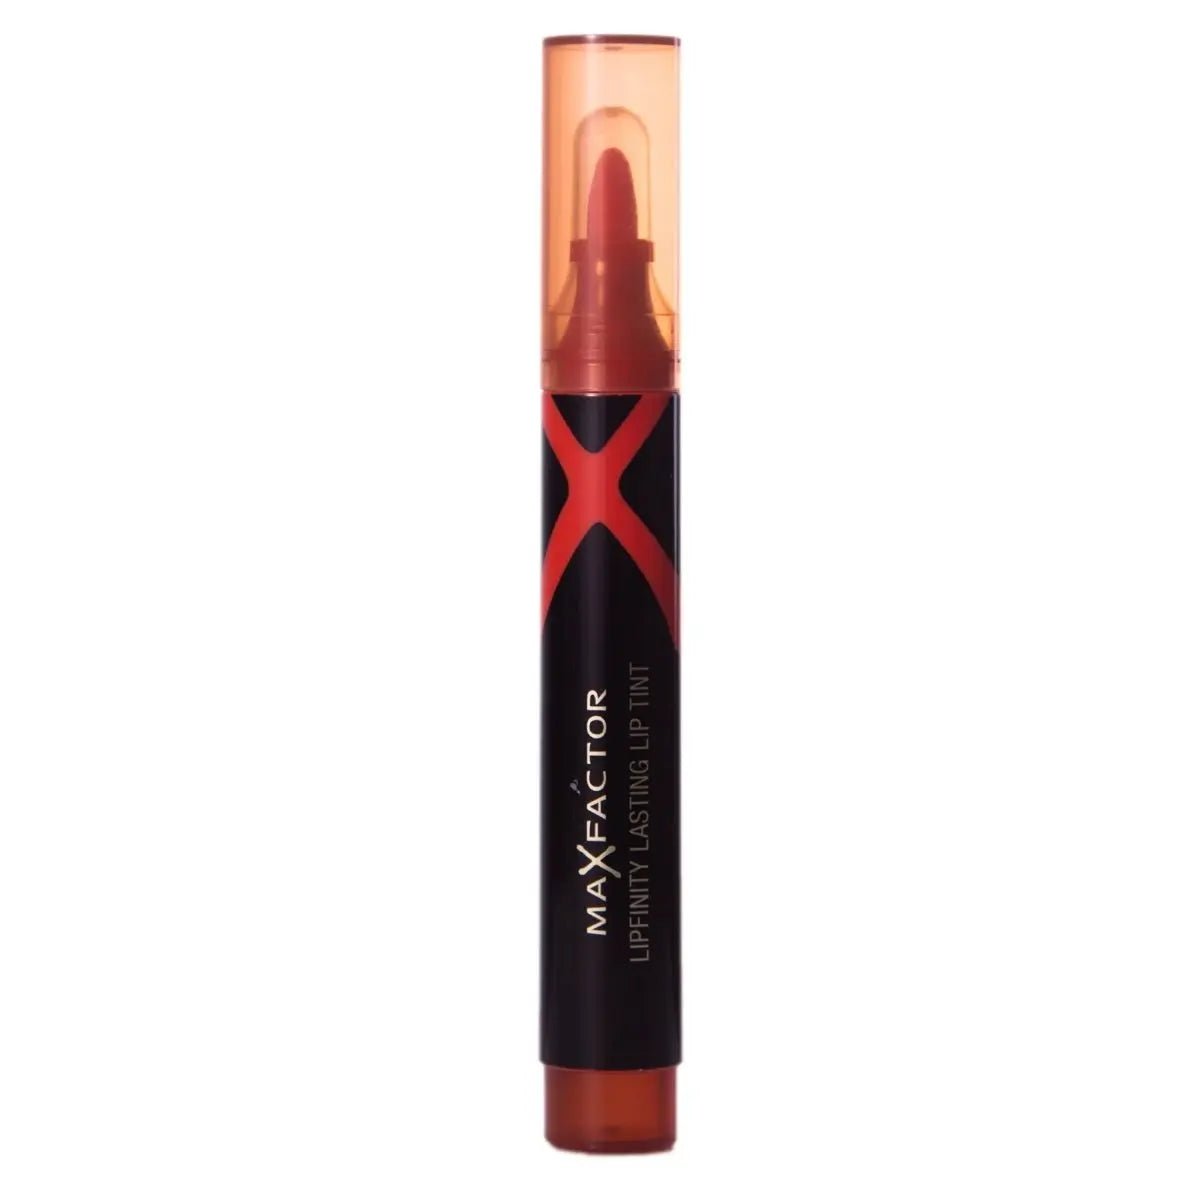 Image of Max Factor Lipfinity Lasting Lip Tint Coral Crush